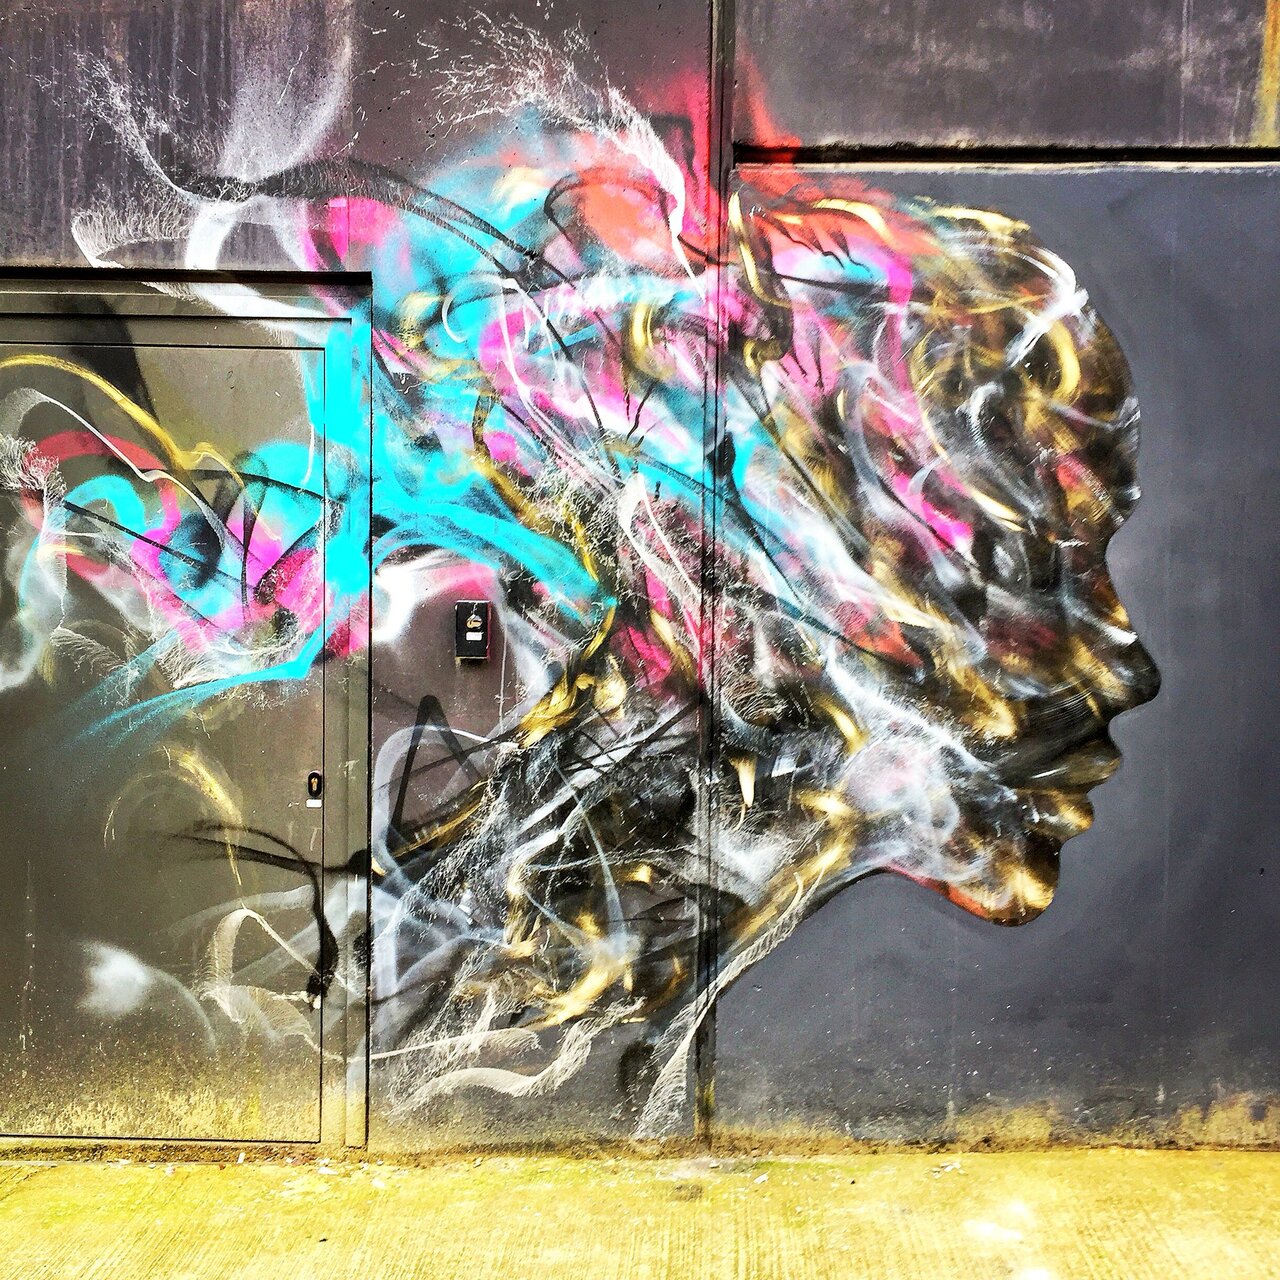 By @_l7m #l7m from #artistfrombrazil #streetart #streetartist #urbanart #urbanartist #graffiti #wall #urbanwalls #graffart #spray #bombing #nirindastreet #paris https://t.co/V3wHkRQ2b1